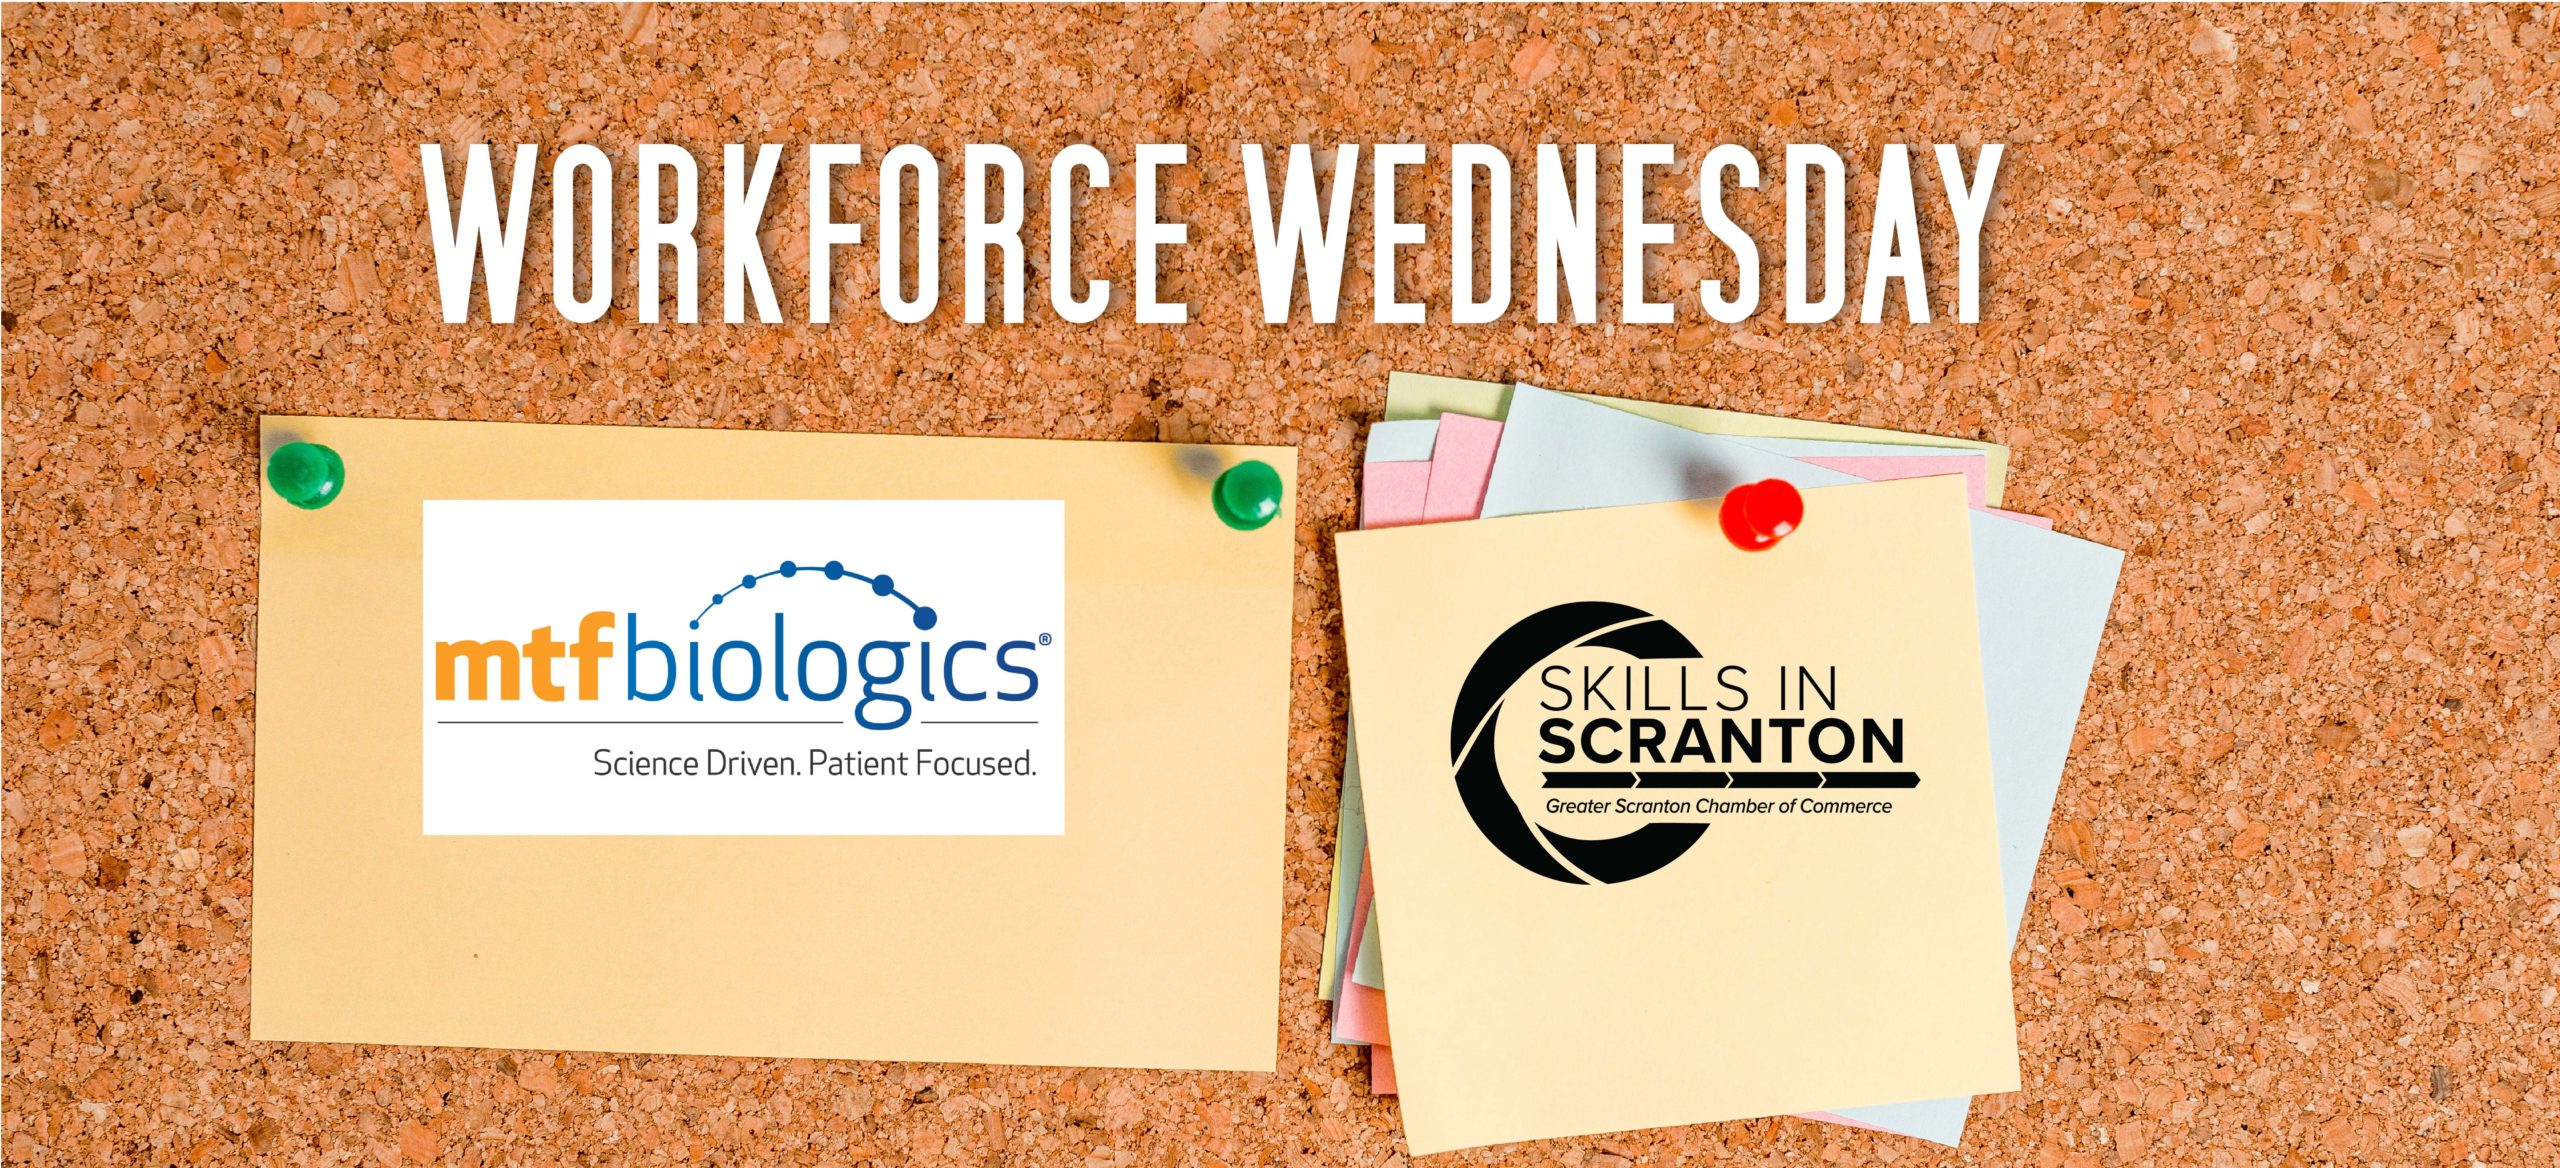 Workforce Wednesday: MTF Biologics